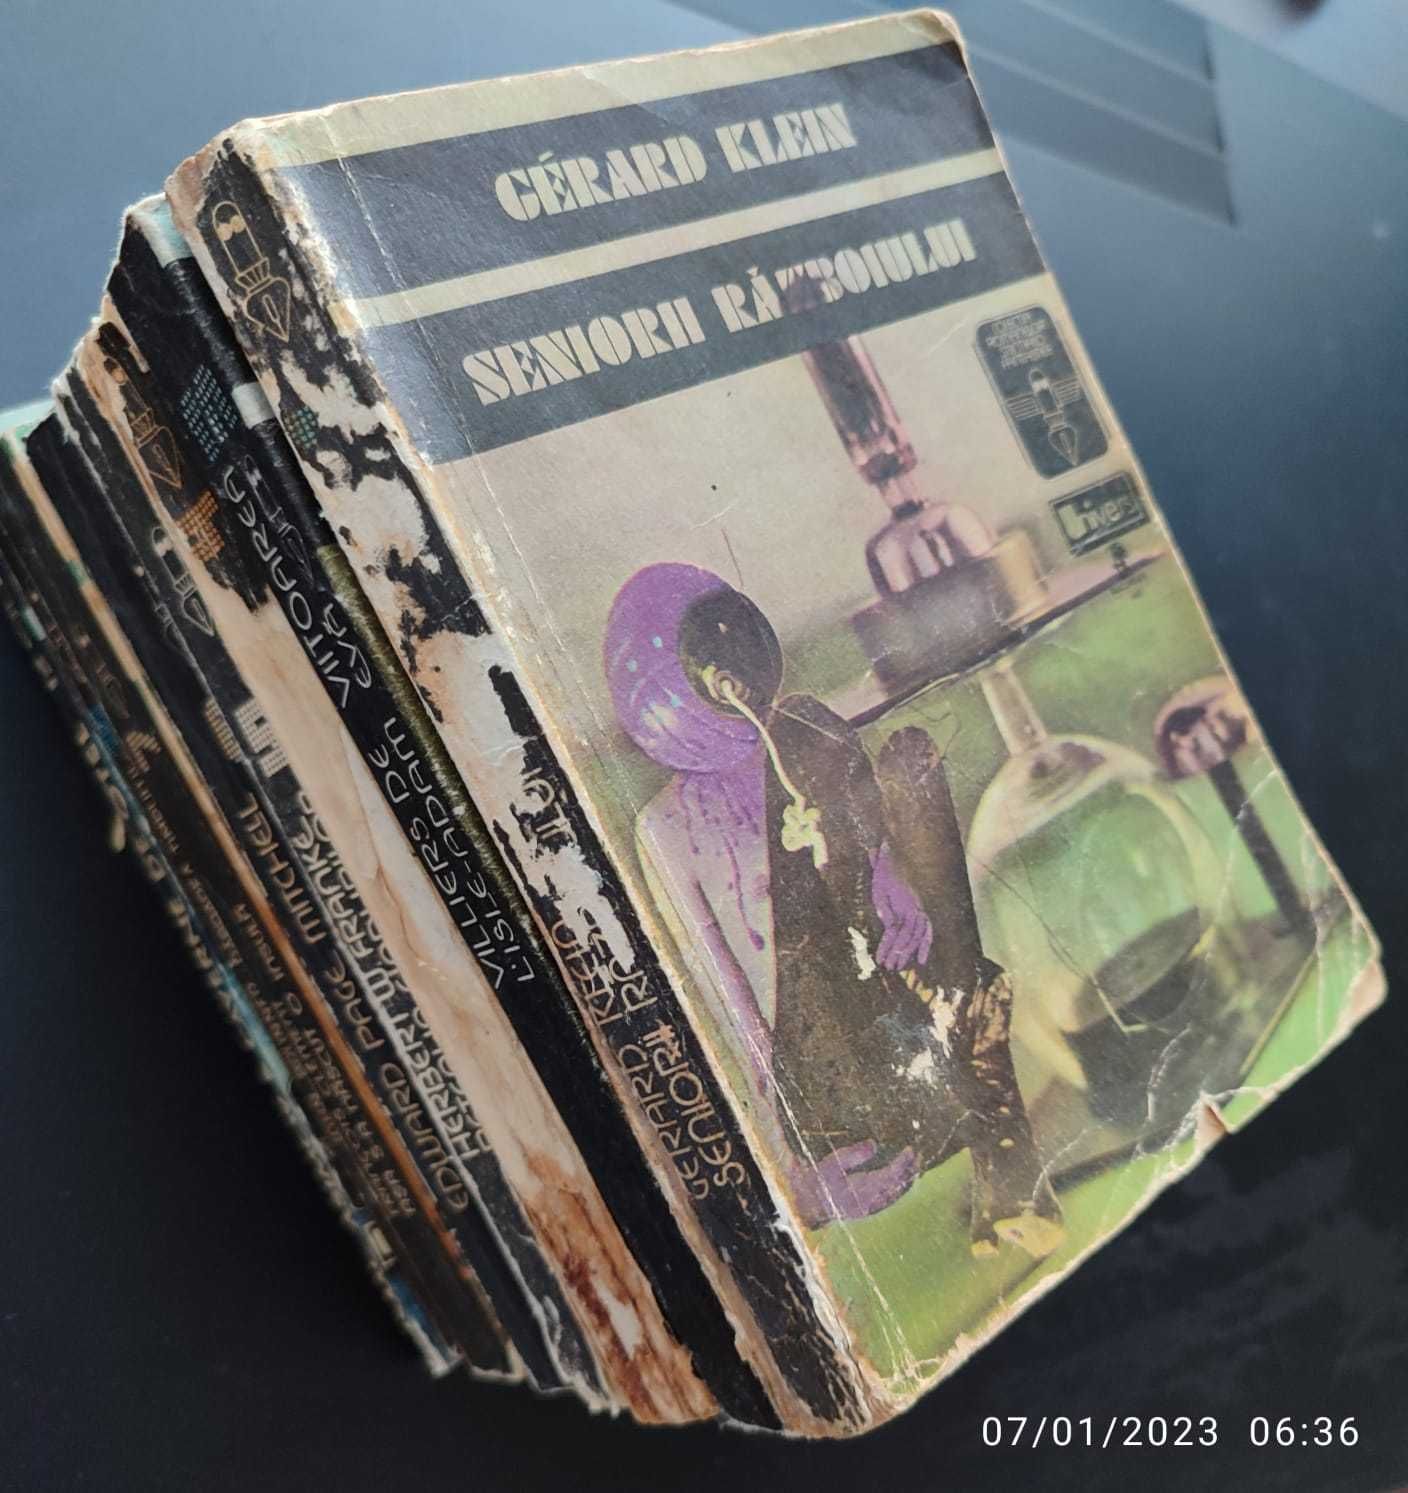 Carti din Colectia CRSF - Editura Univers - 8 volume